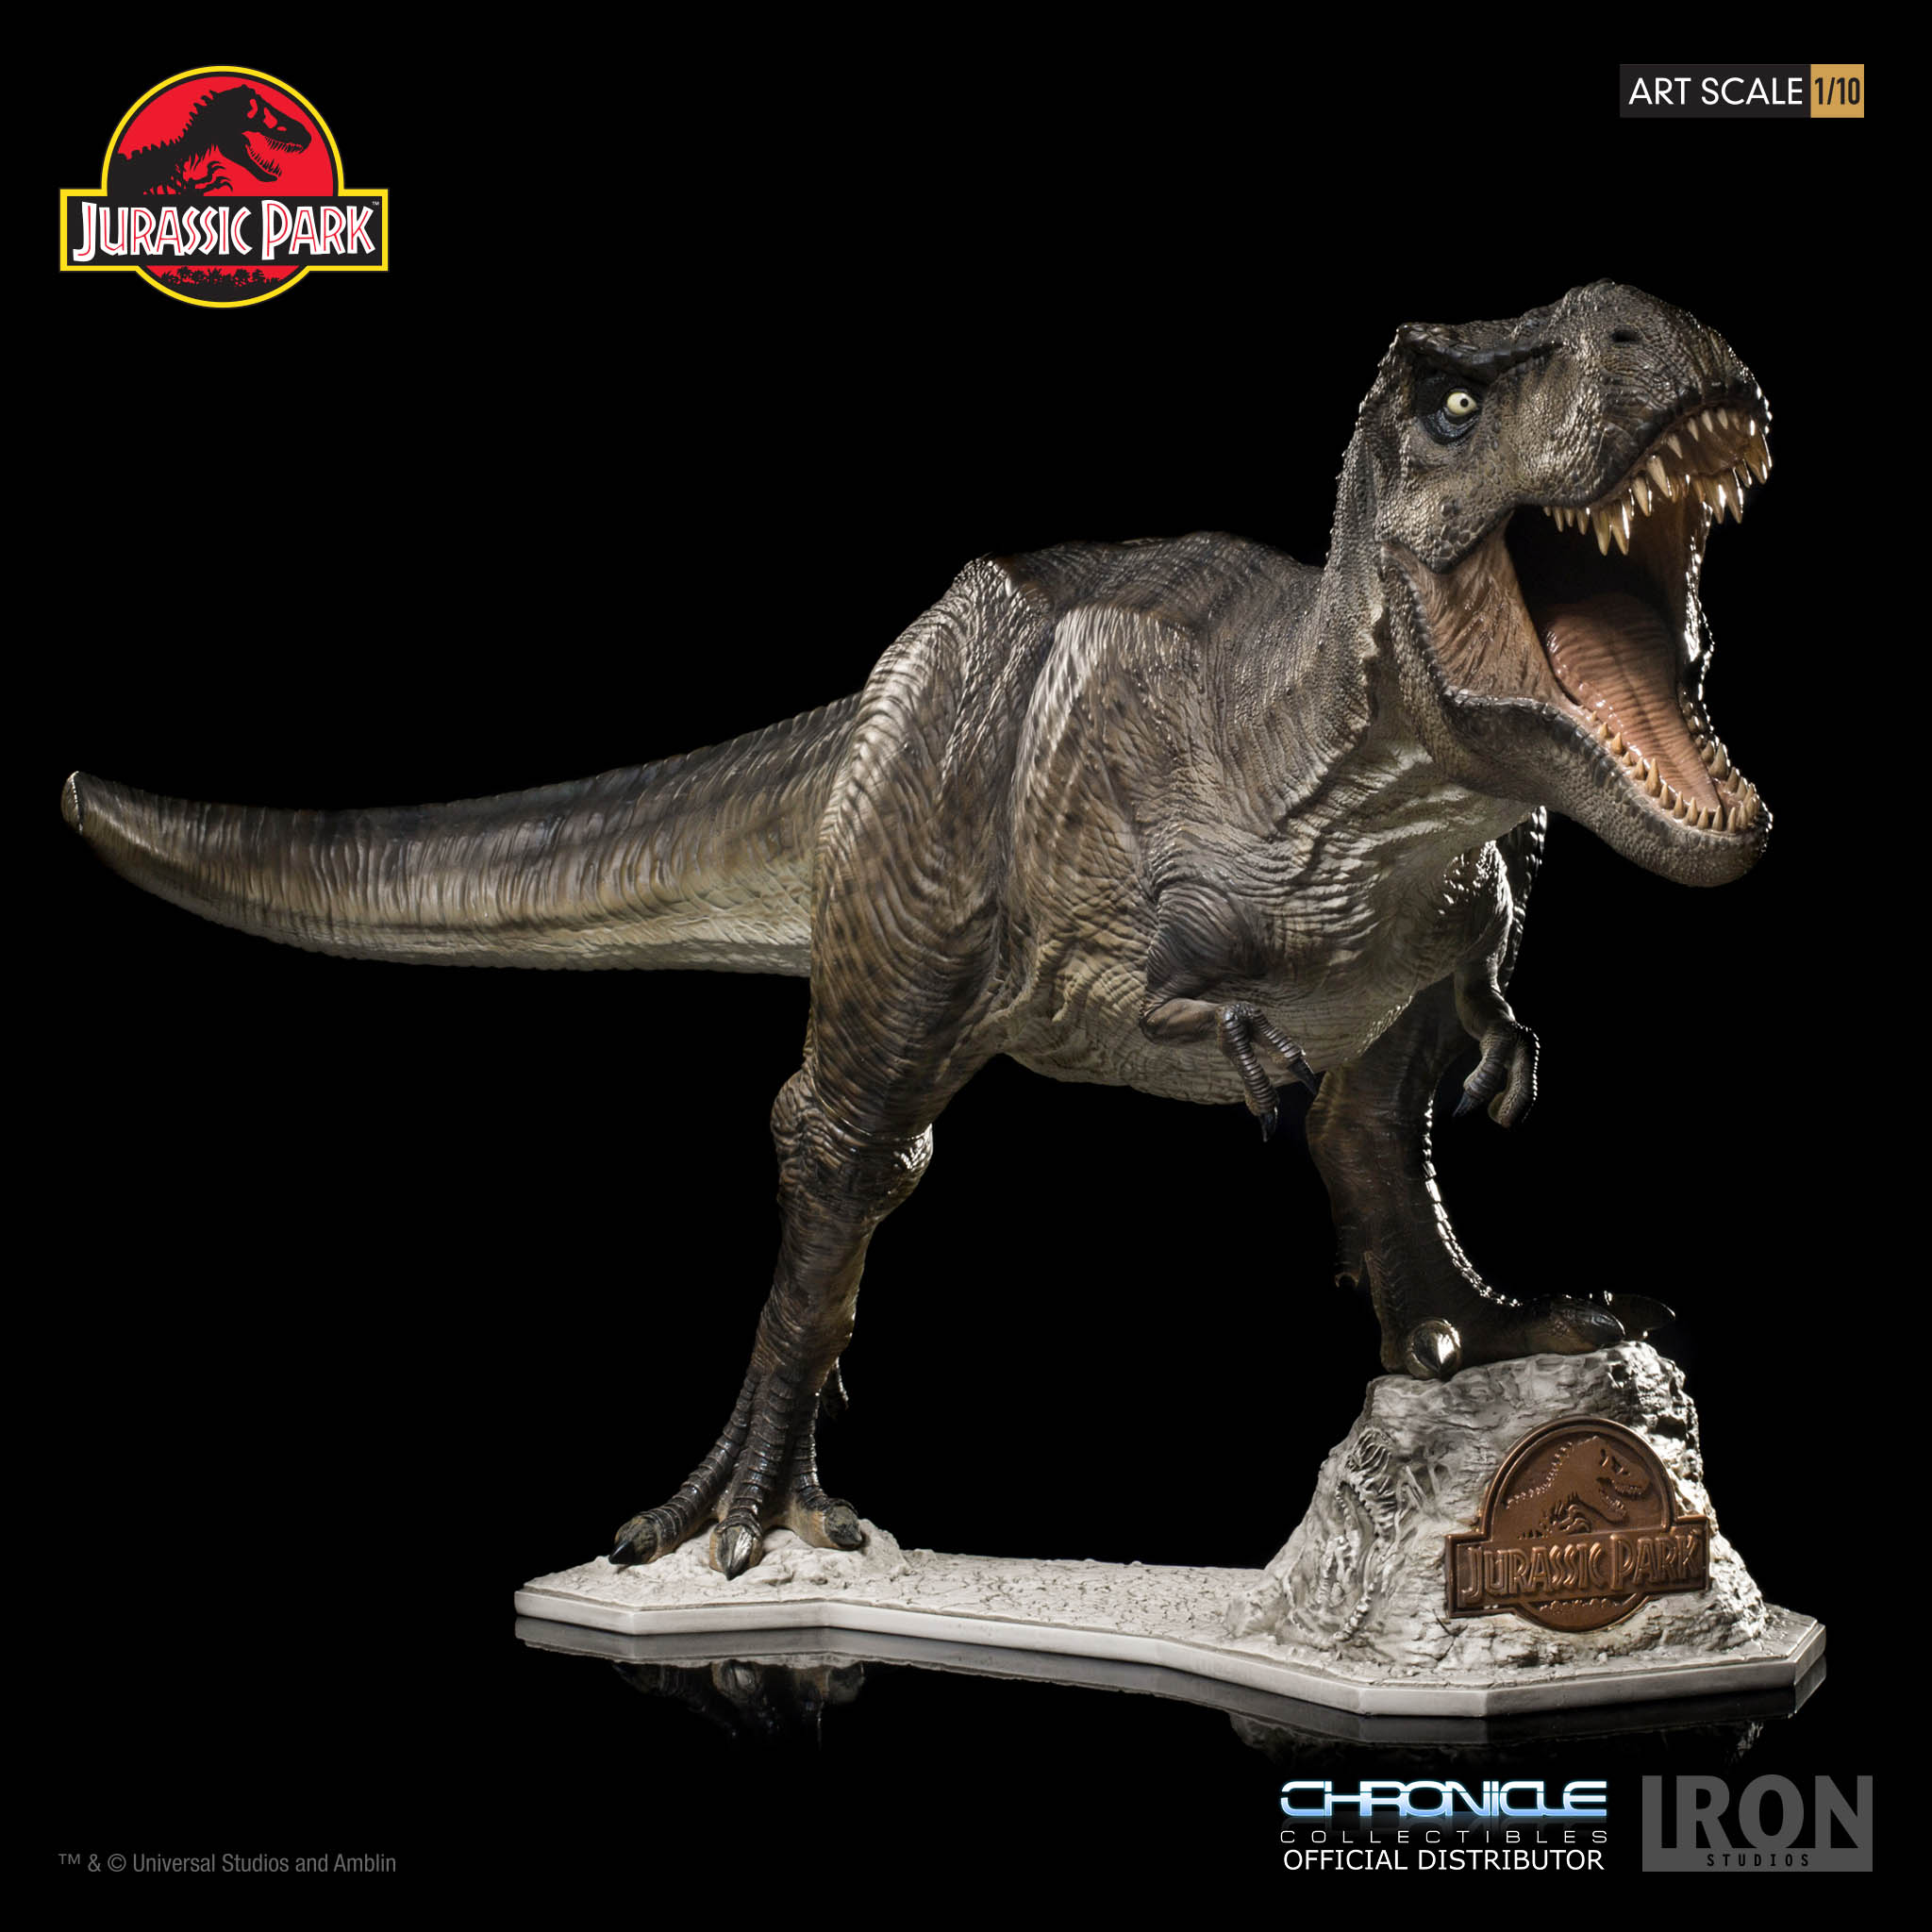 Jurassic Park & Jurassic World - Iron Studio 7oj8AJuy_o